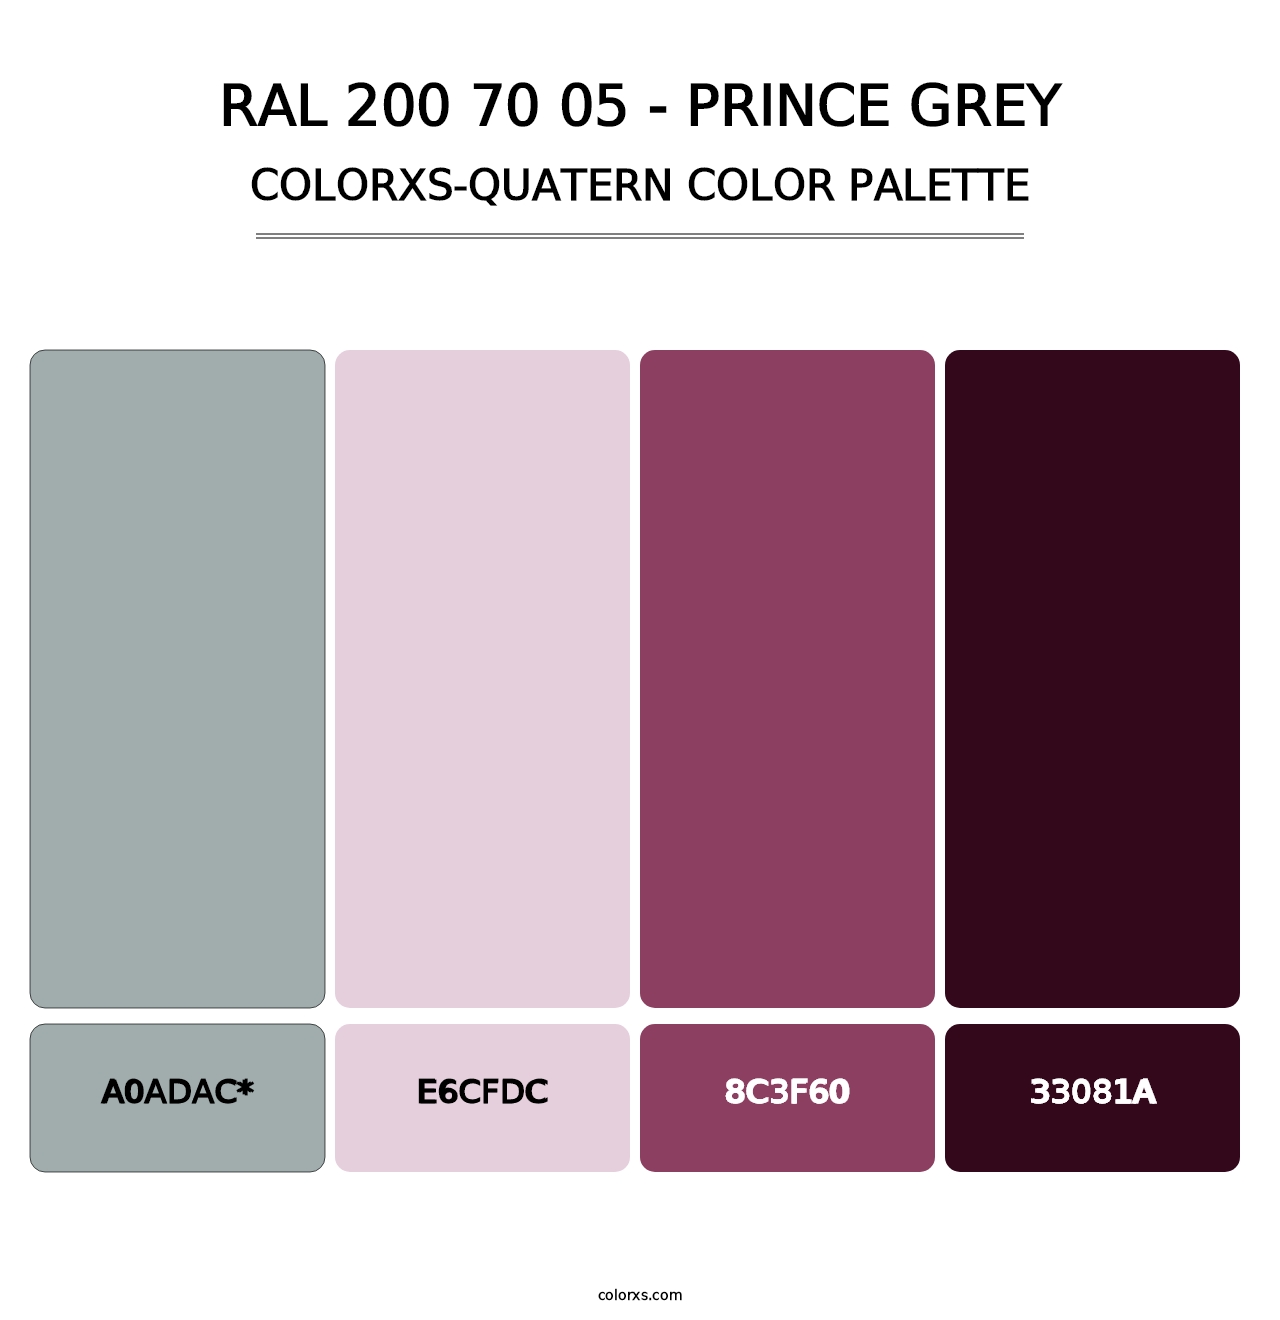 RAL 200 70 05 - Prince Grey - Colorxs Quatern Palette